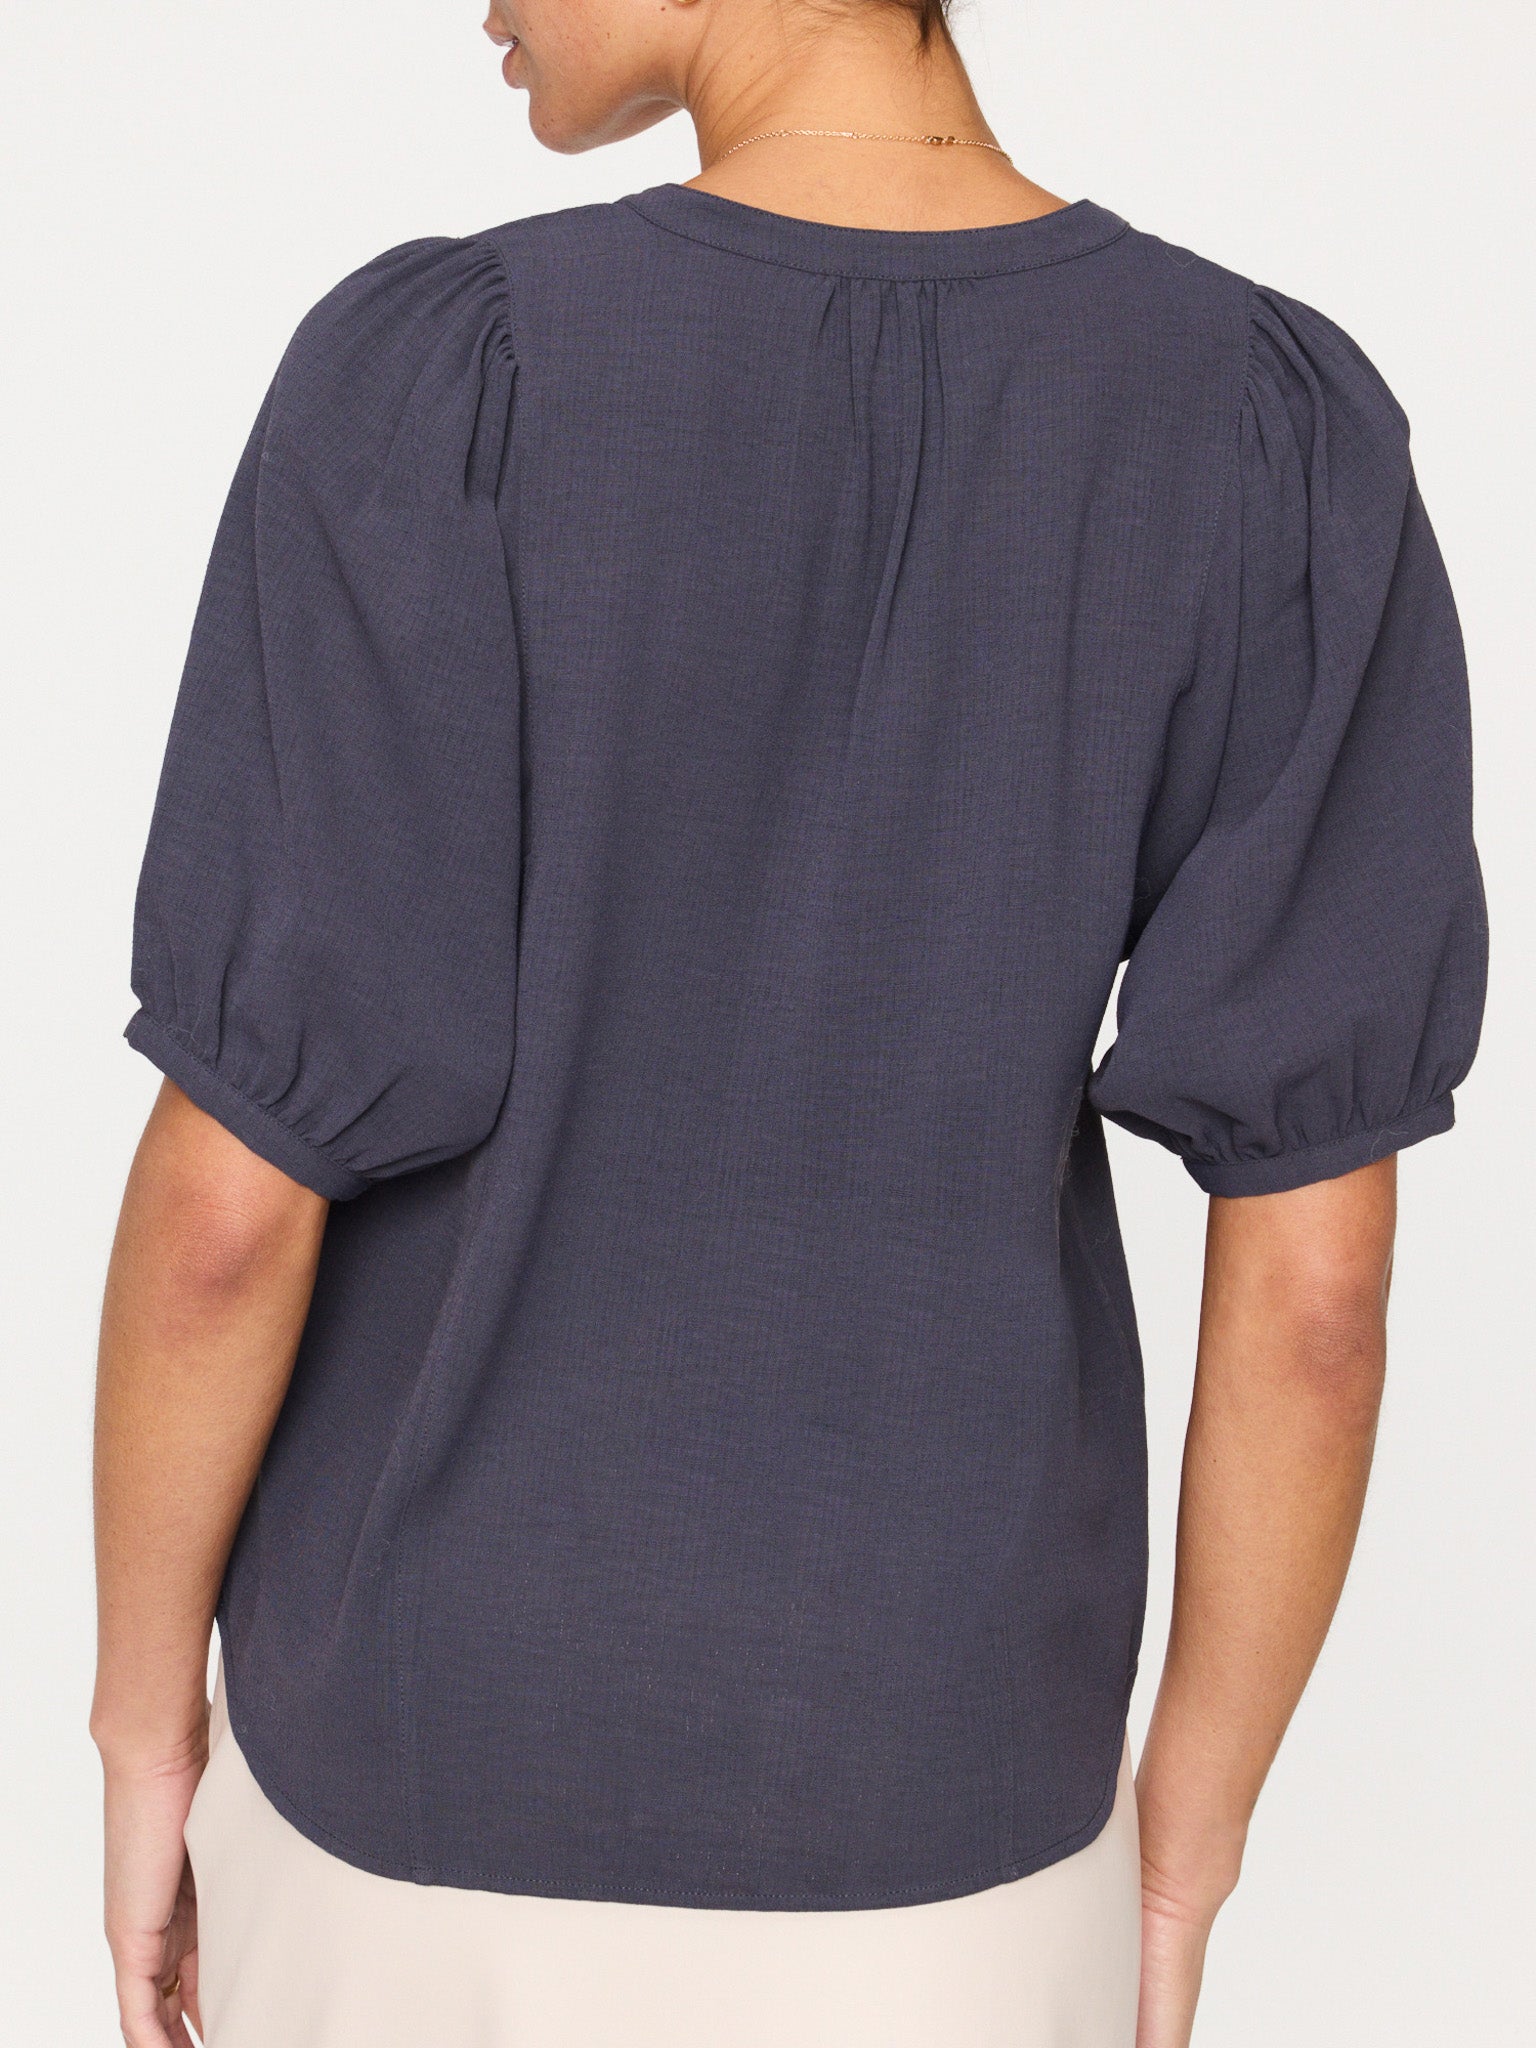 East v-neck gray blouse back view